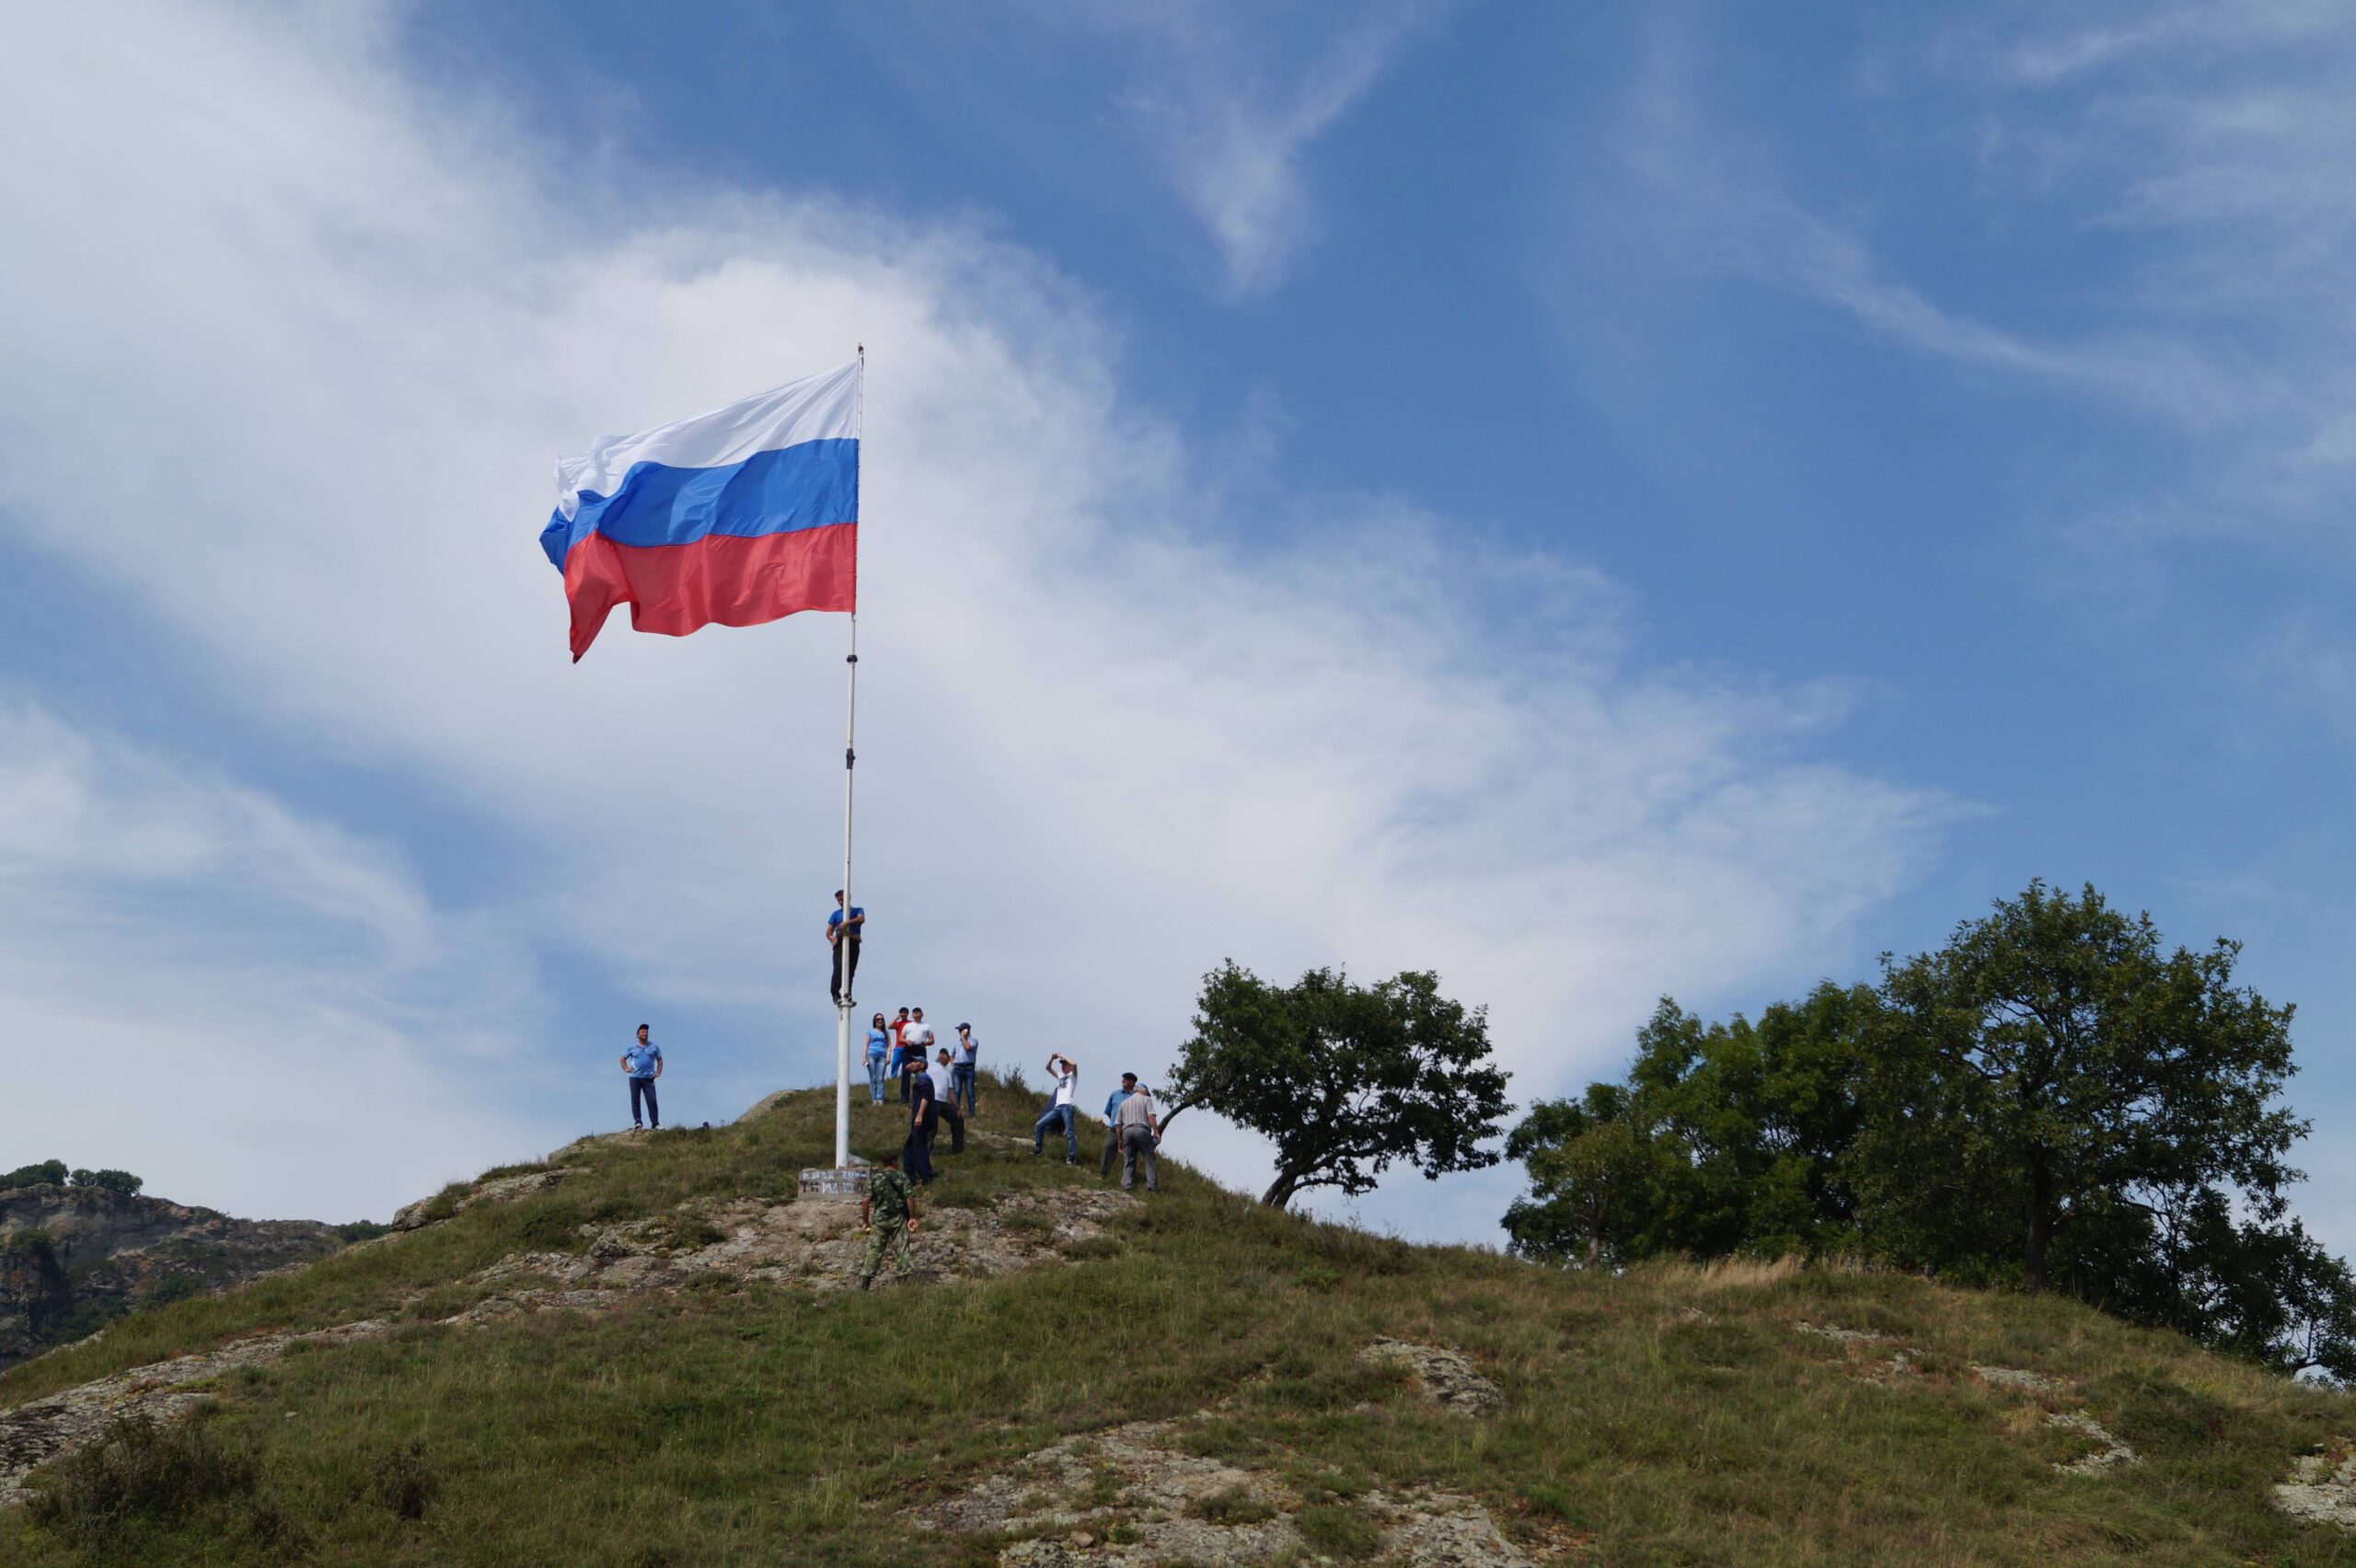 Флаг Якутии Фото